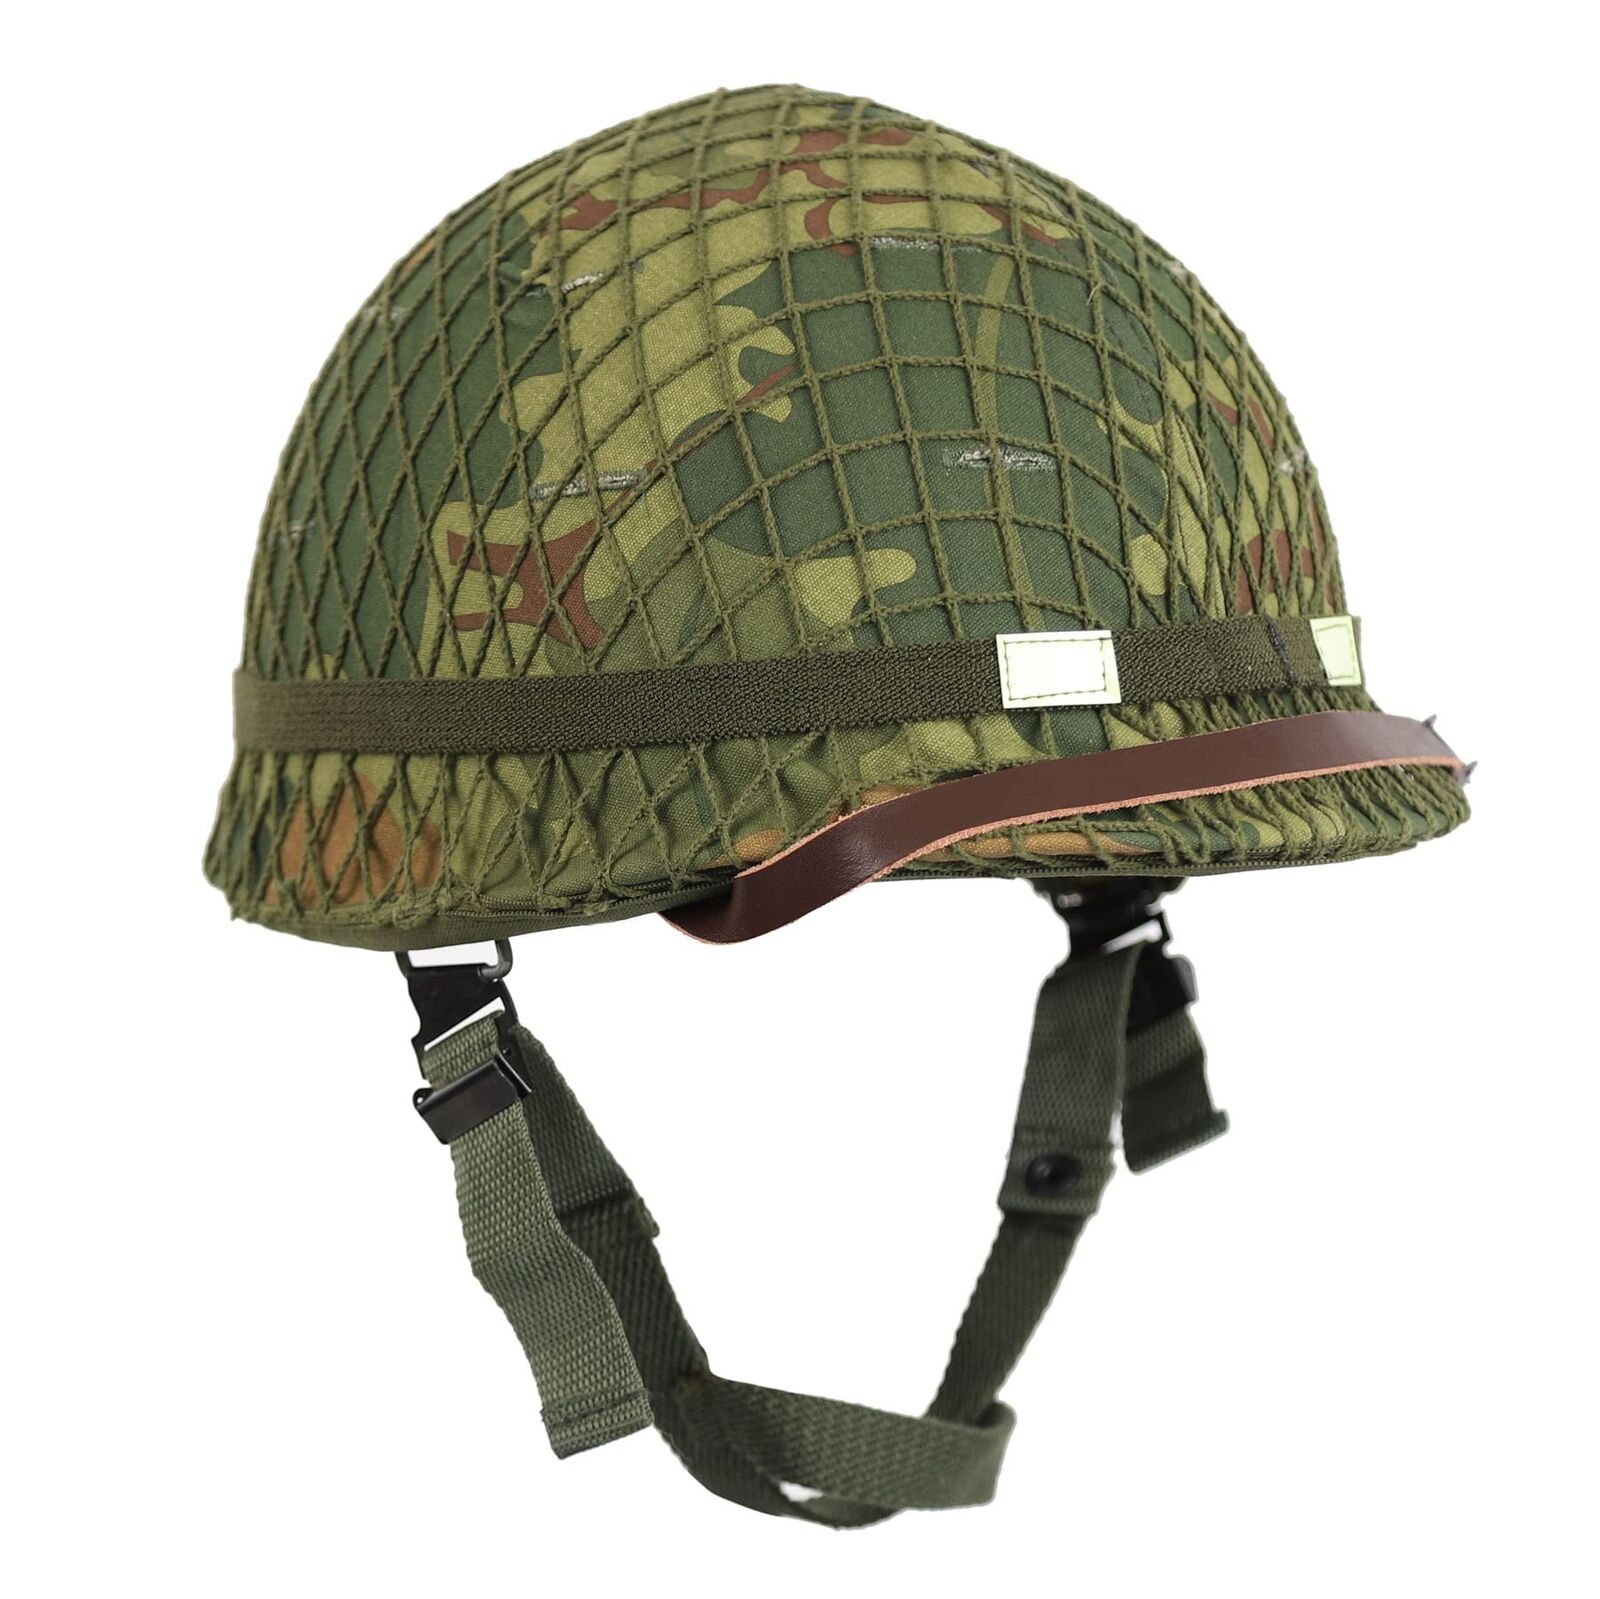 WW2 WWII Vietnam War Era US M1 Combat Helmet with Mitchell Cover 1959 Dated R...